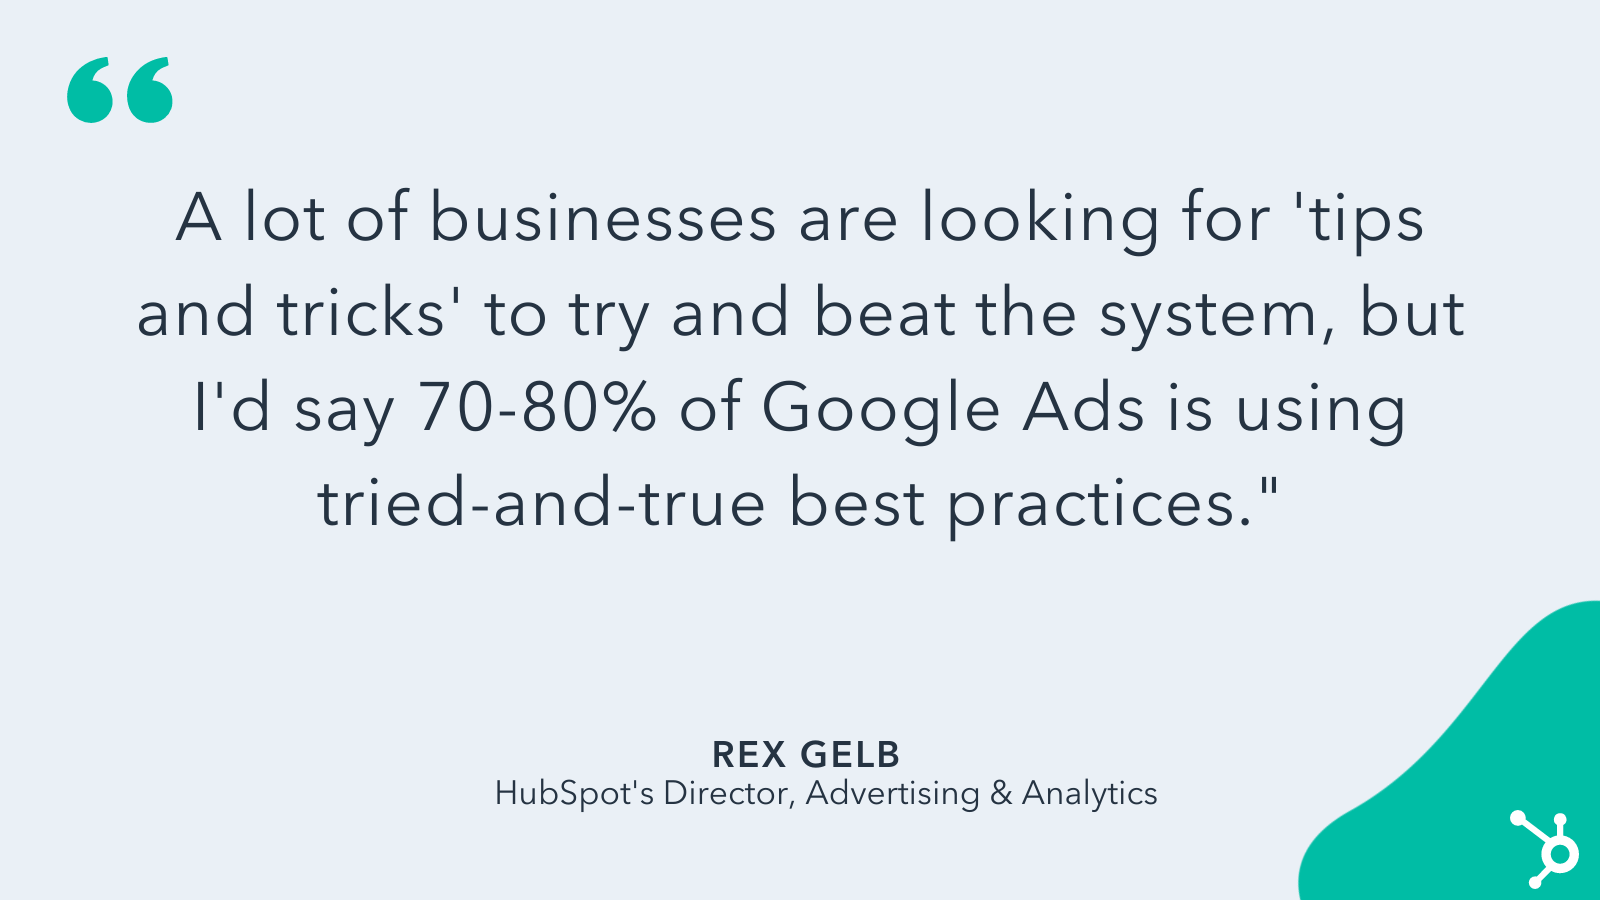 rex gelb در مورد استراتژی های تبلیغات گوگل برای مشاغل کوچک